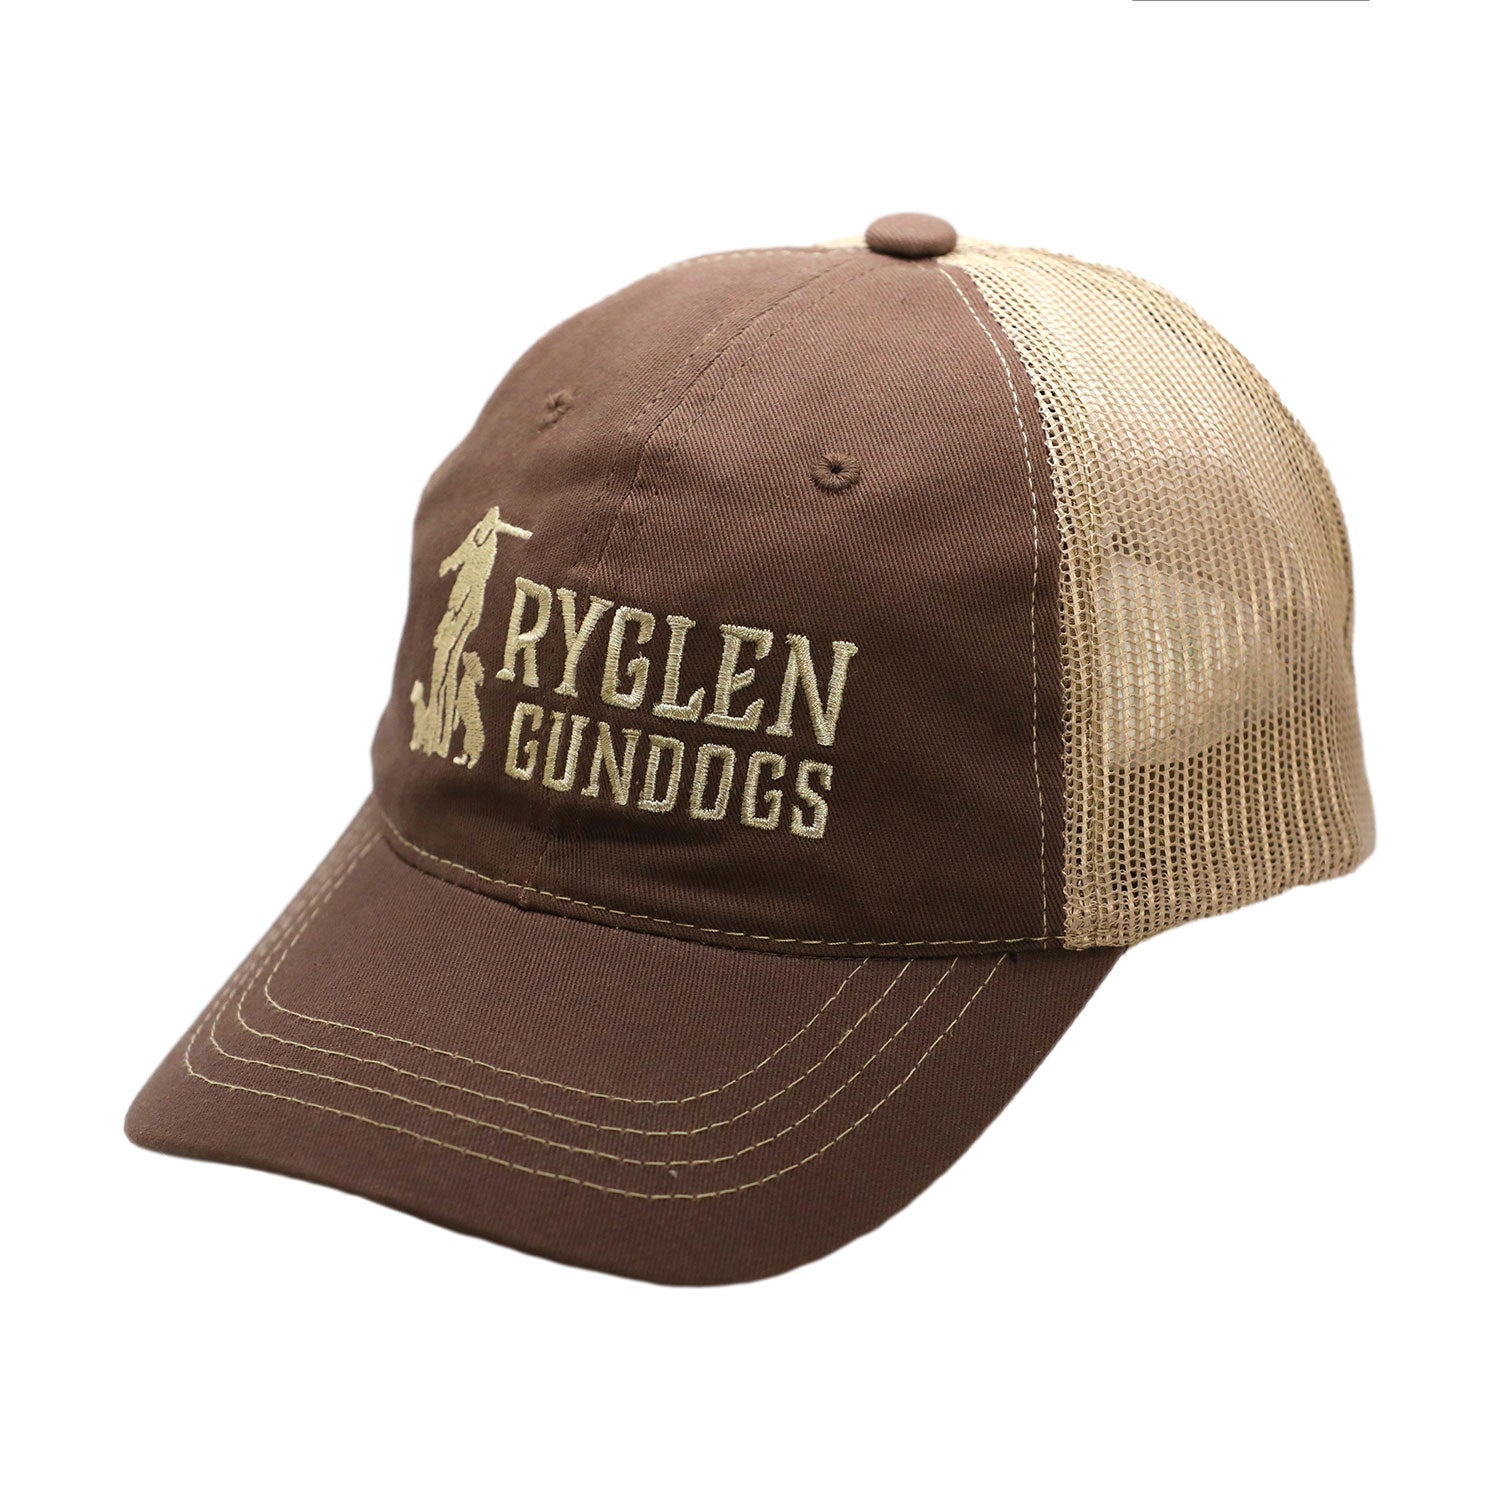 Ryglen Hat - Brown and Tan low profile - Ryglen Gundogs